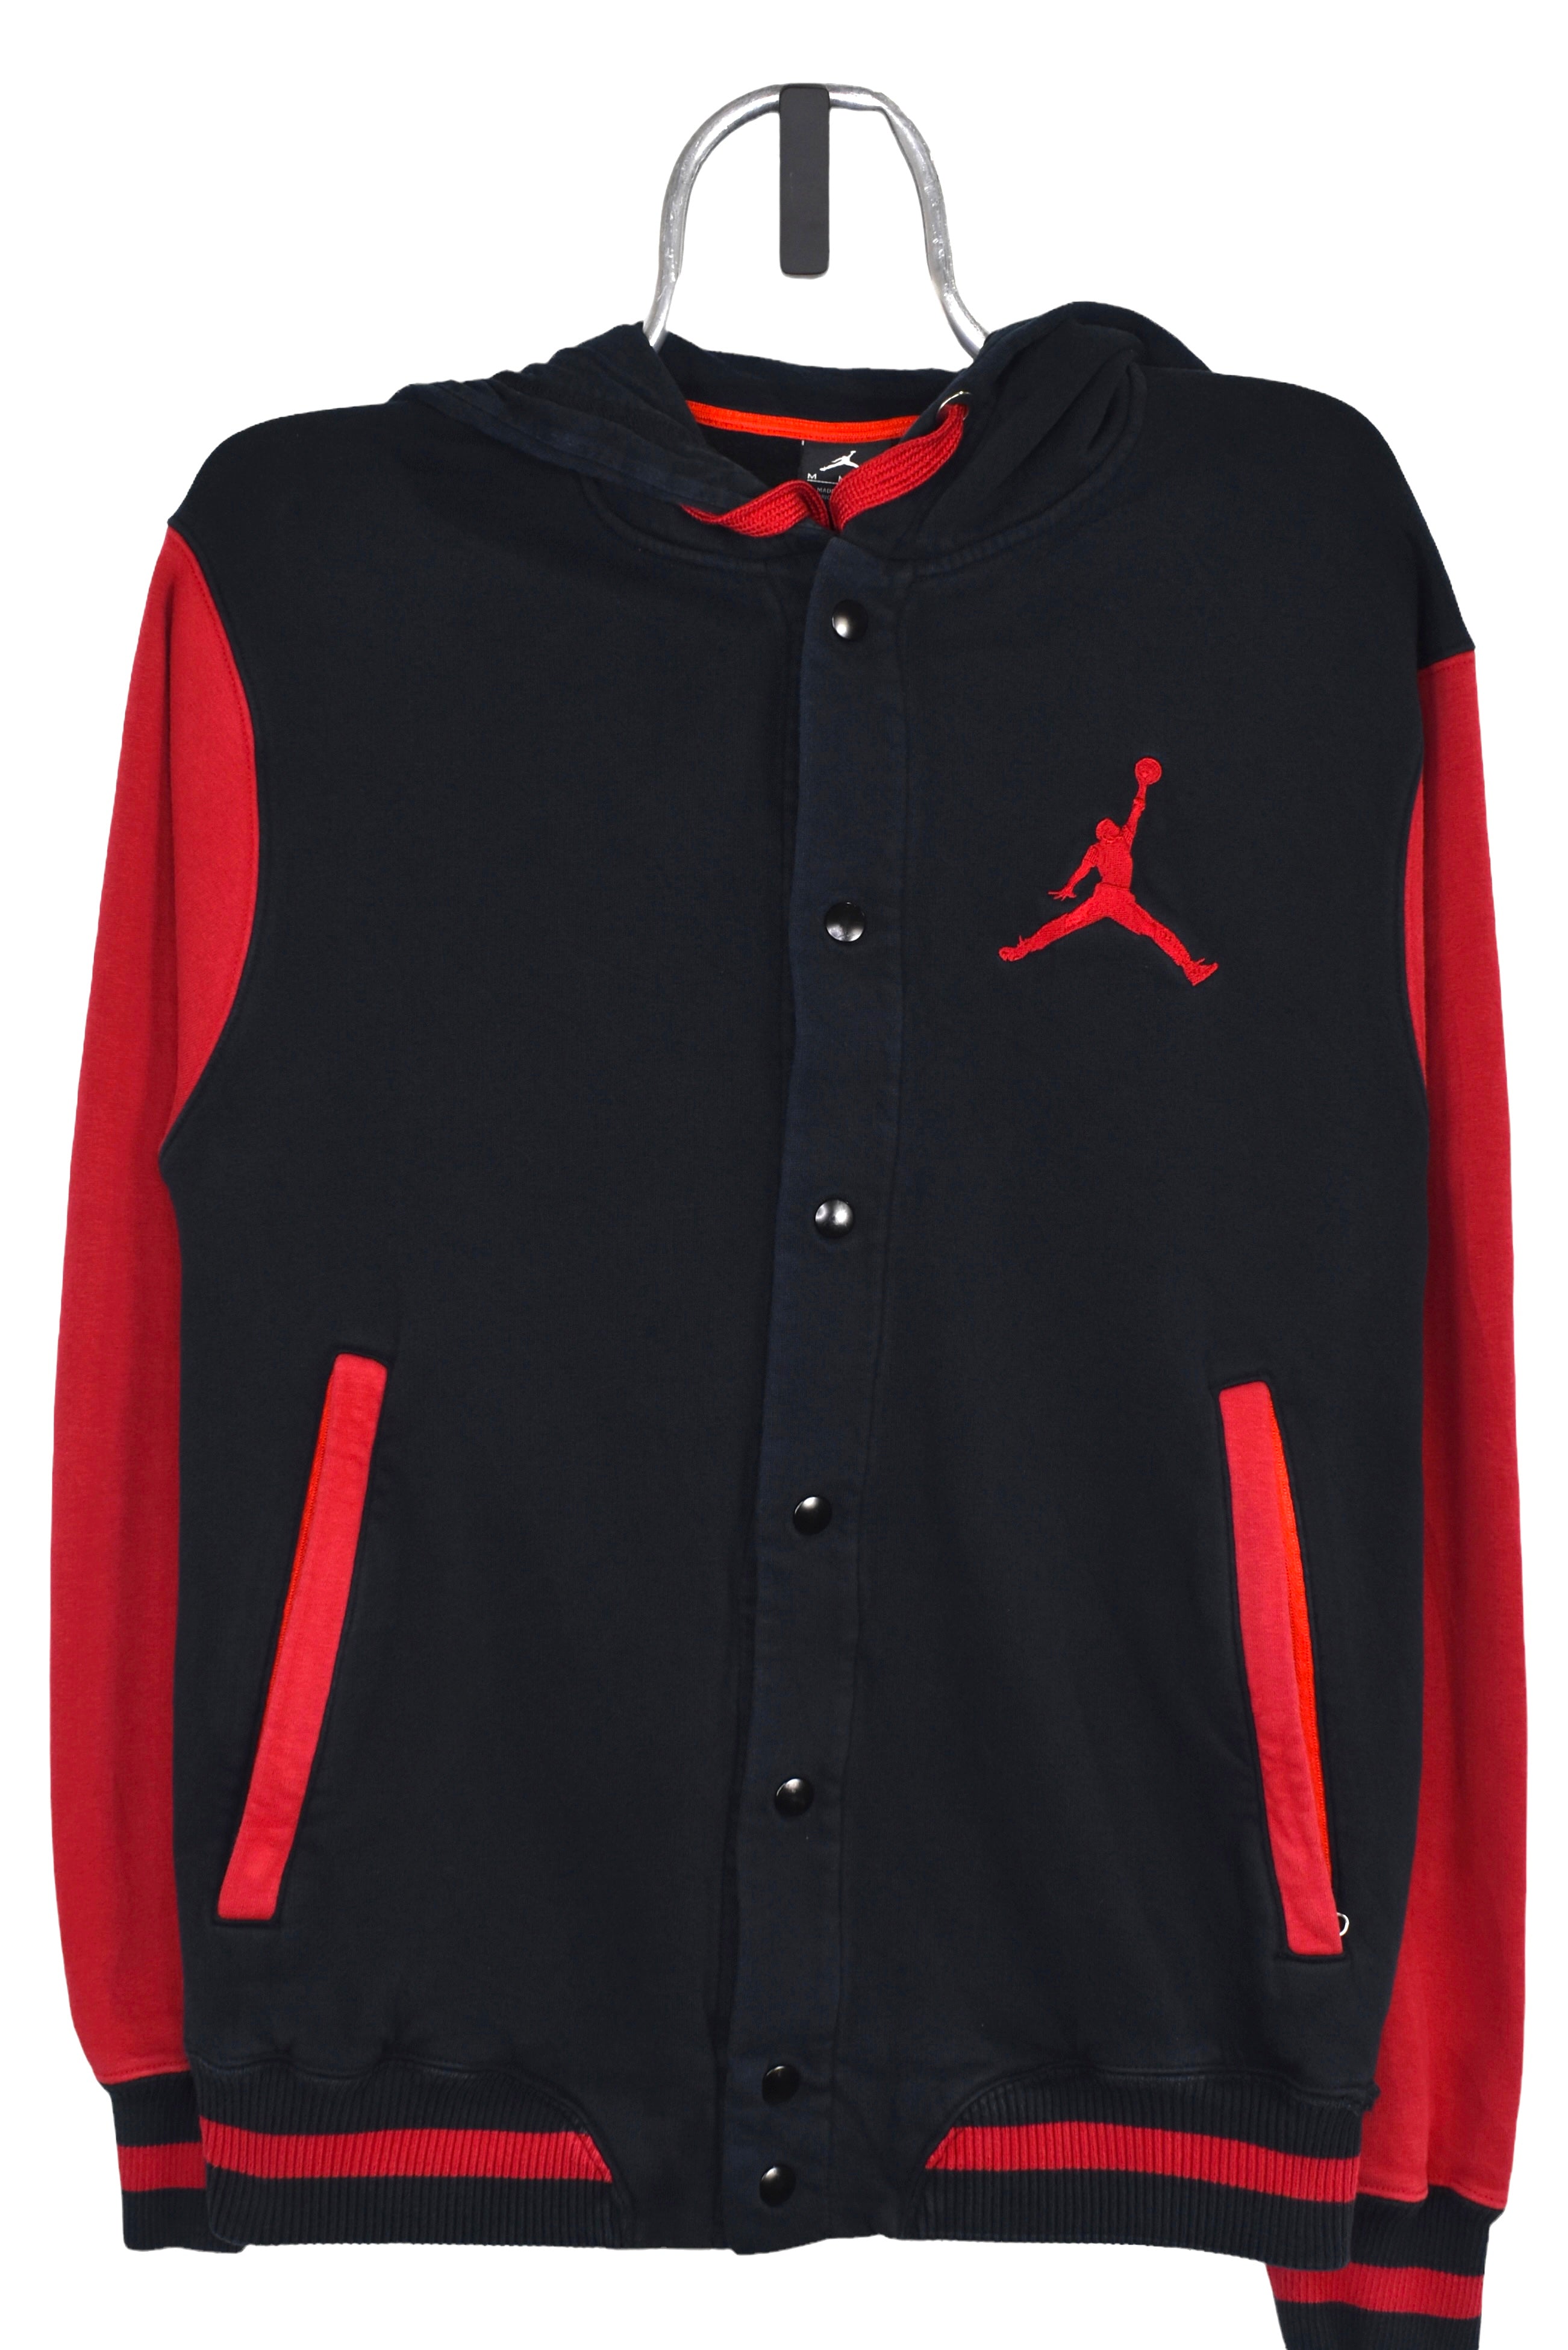 Air Jordan | Essentials Men's Warmup Jacket | Black/Red | SportsDirect.com